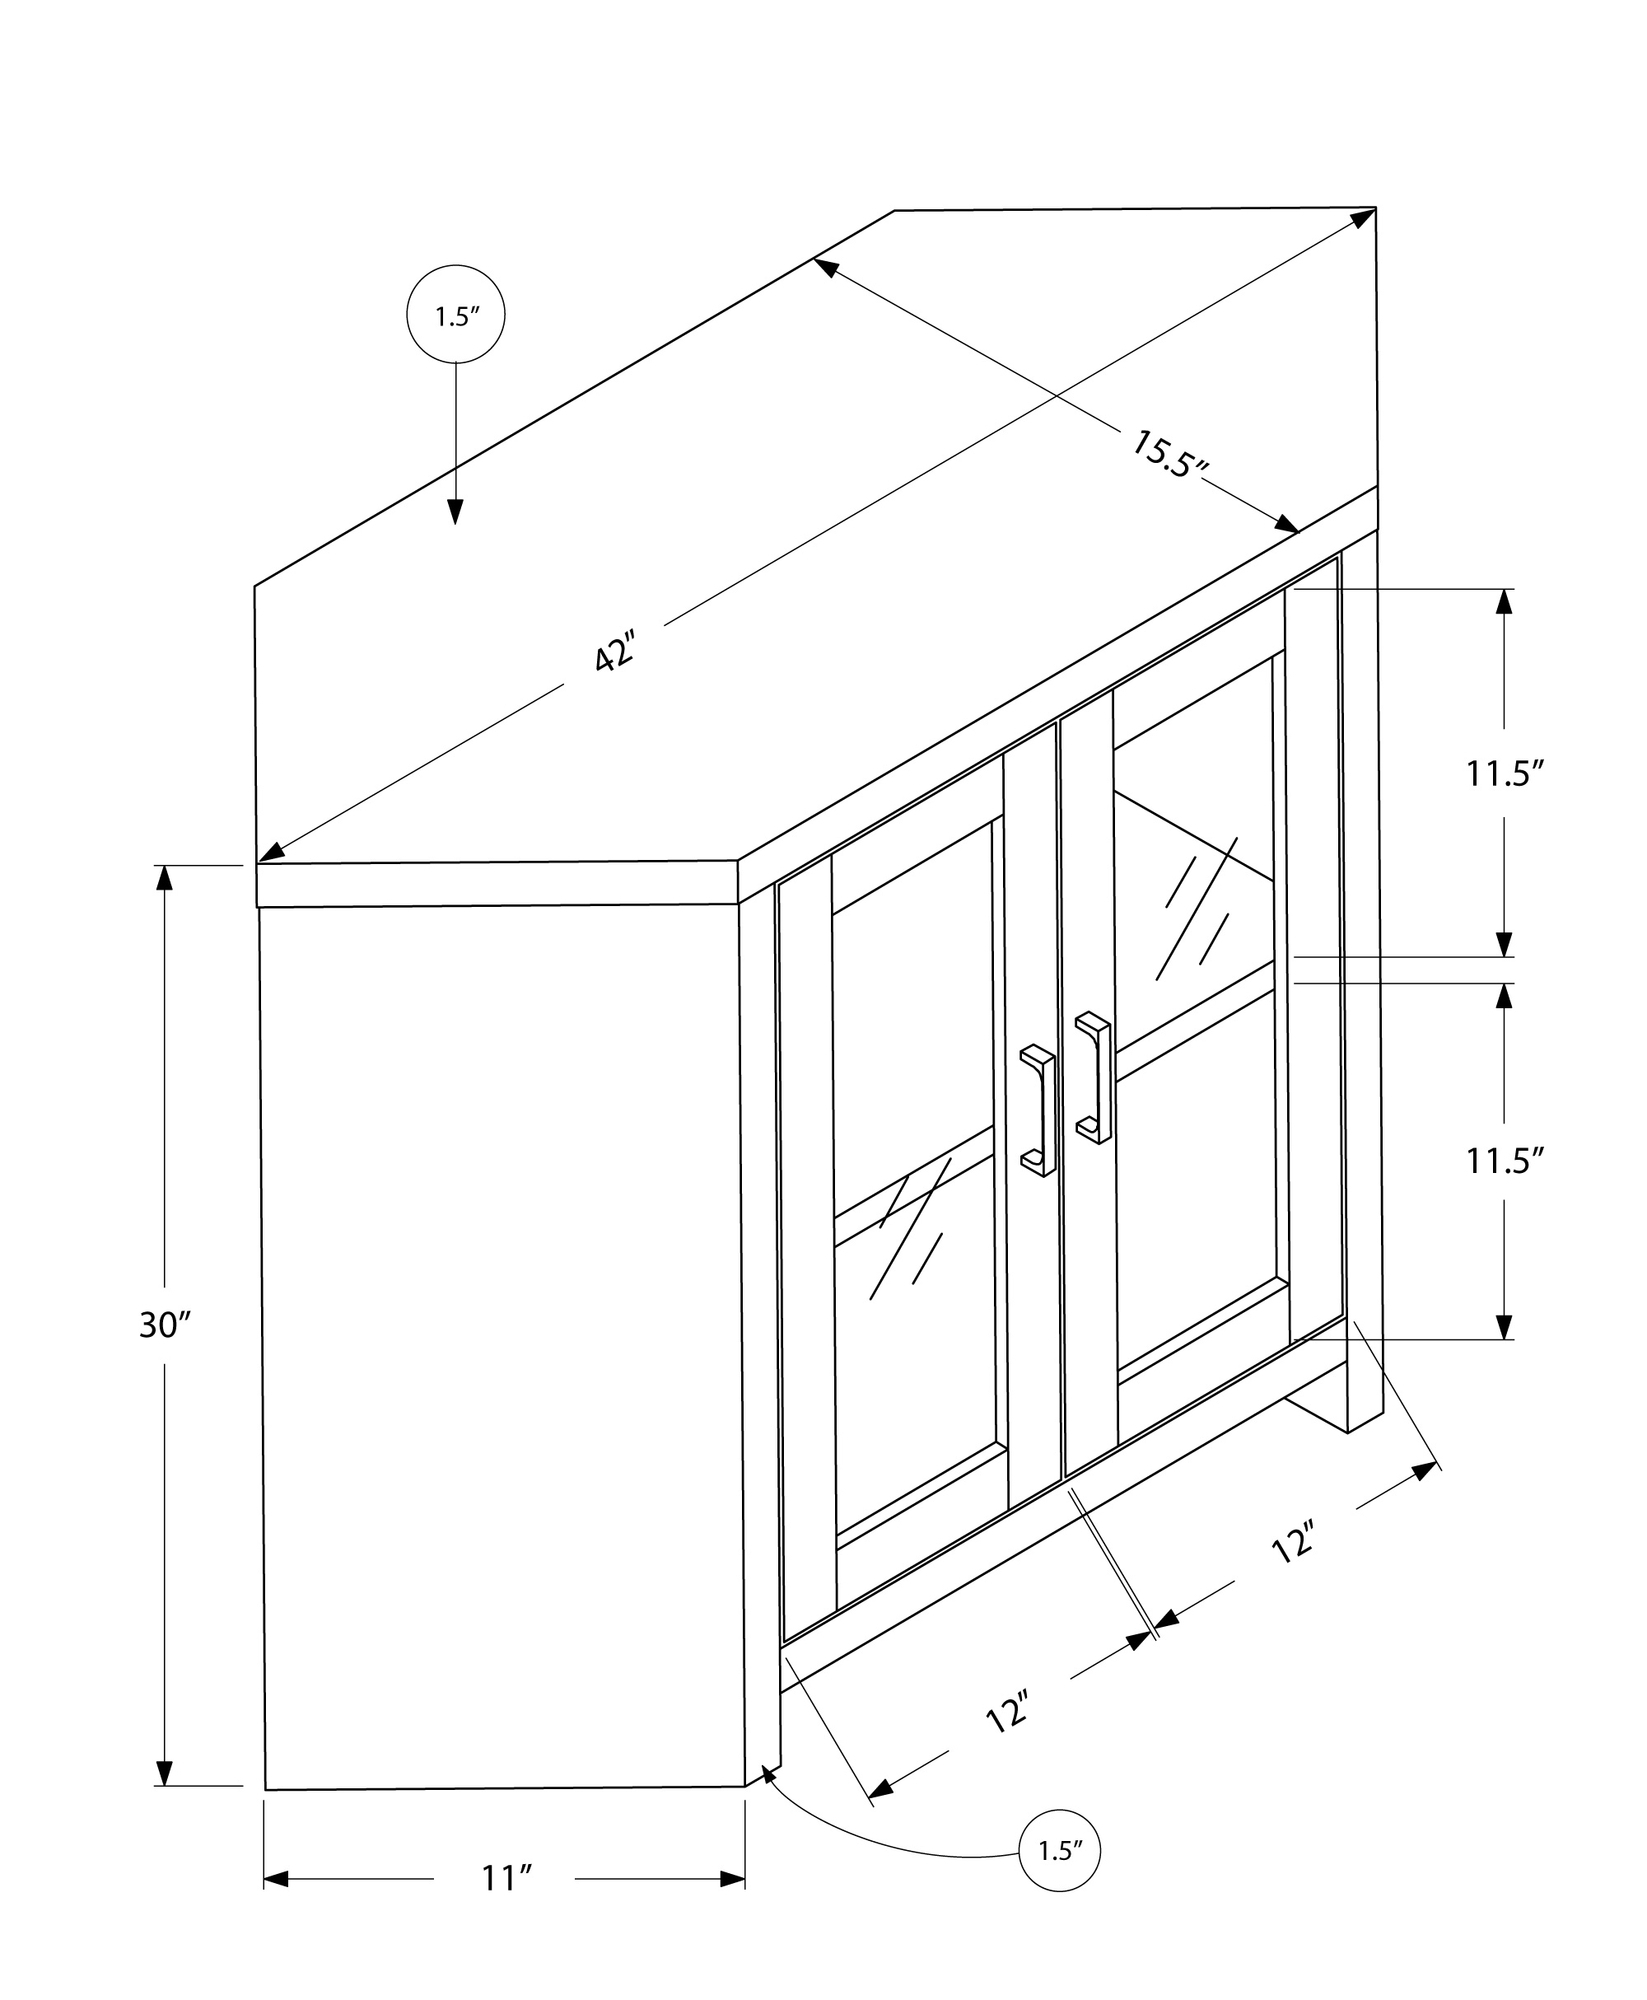 White Corner TV Stand With Glass Doors